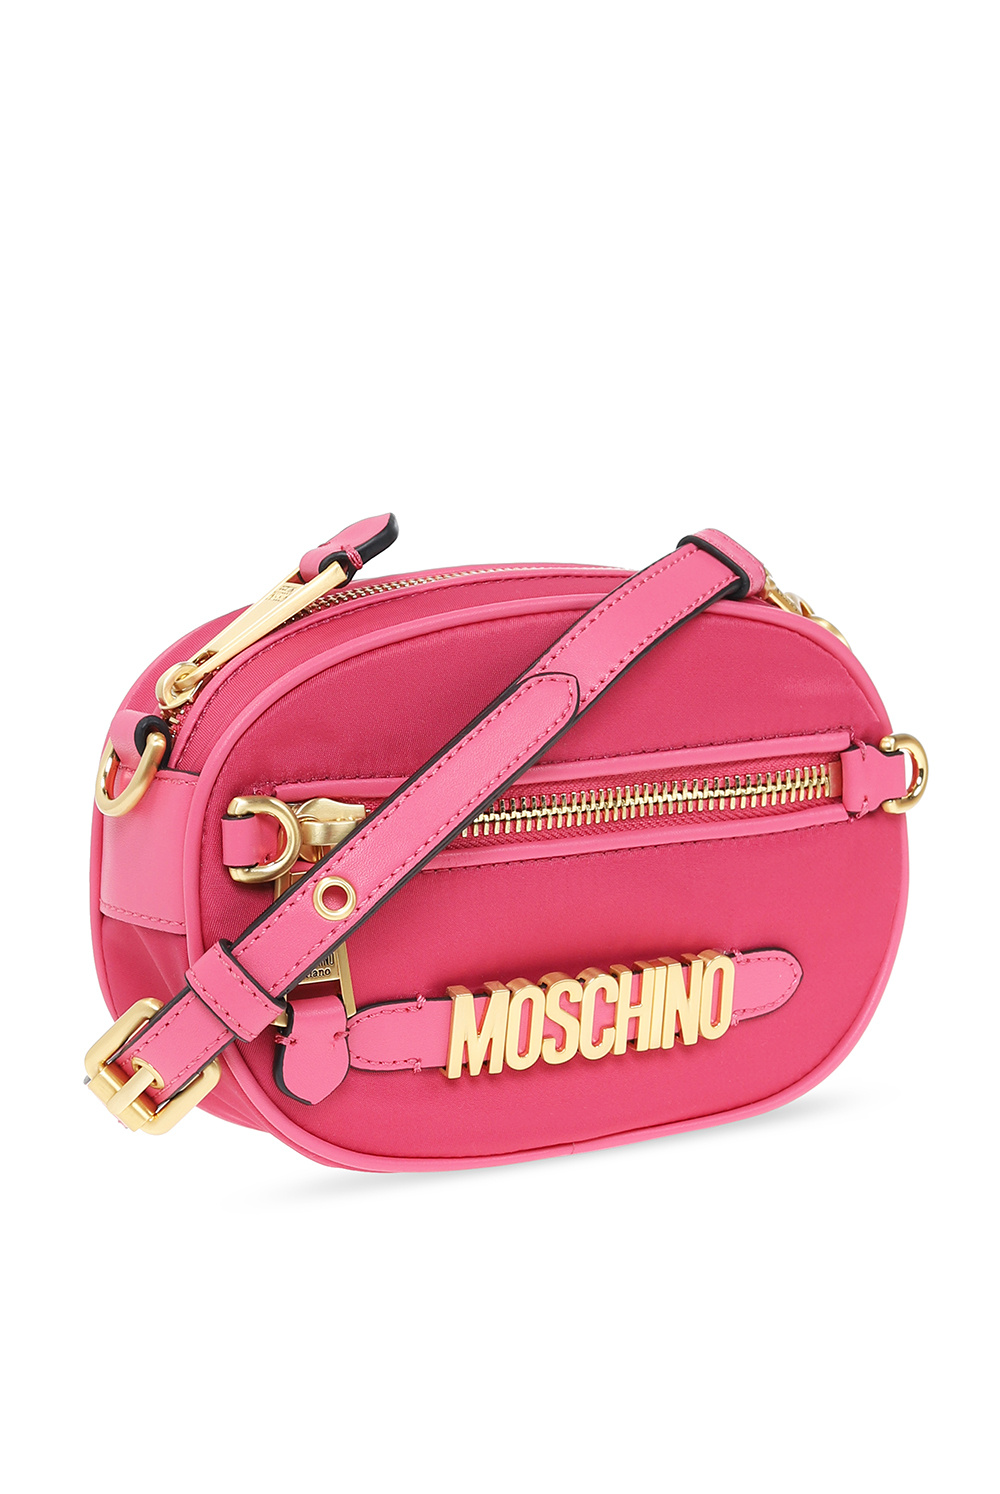 Moschino Isabel Marant Étoile Messenger & Crossbody Bags